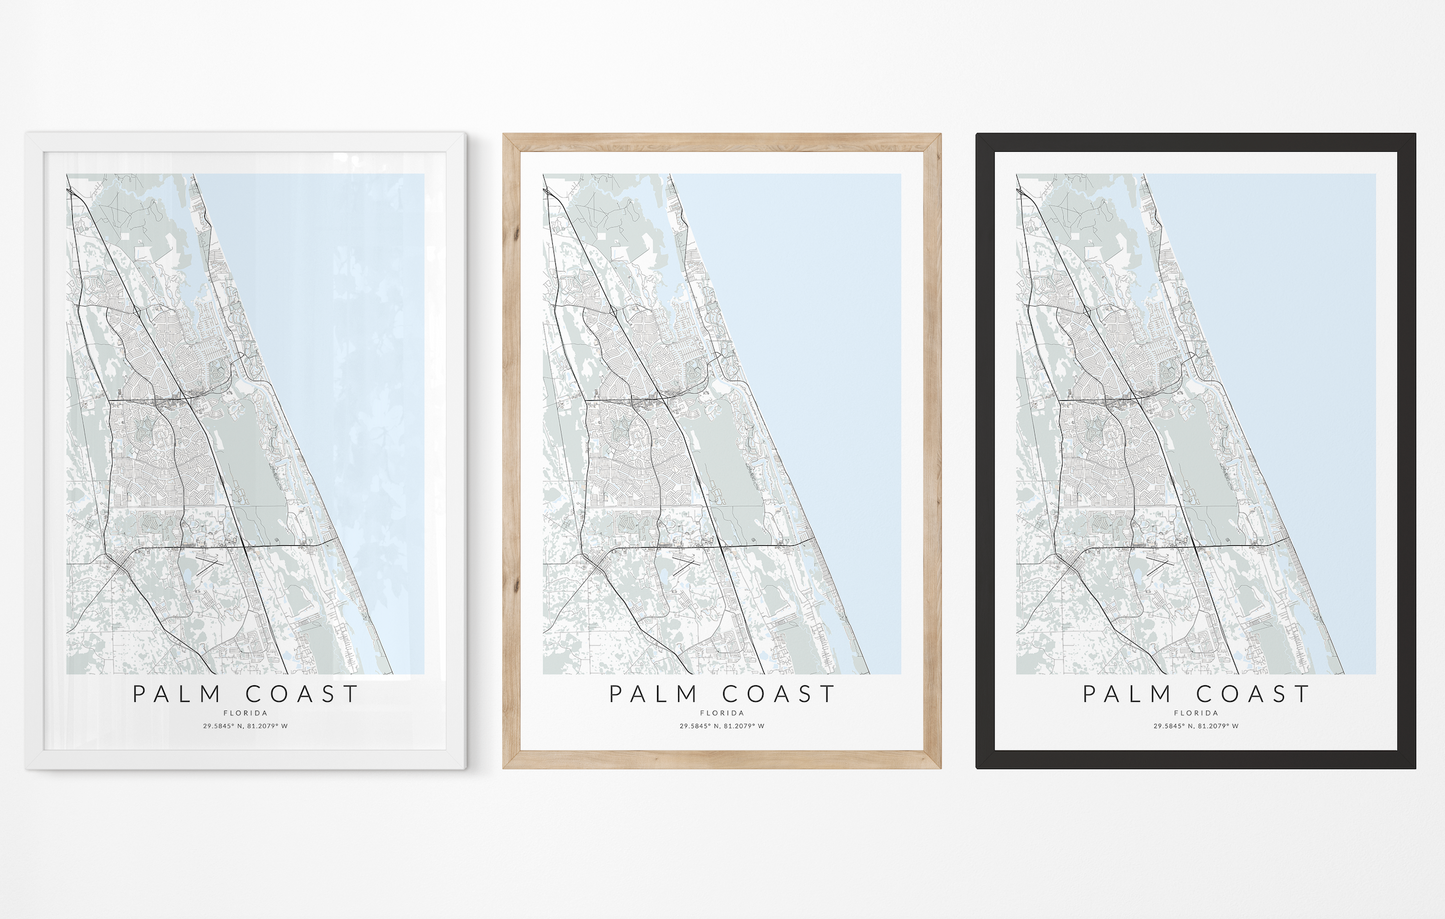 Palm Coast Map Print